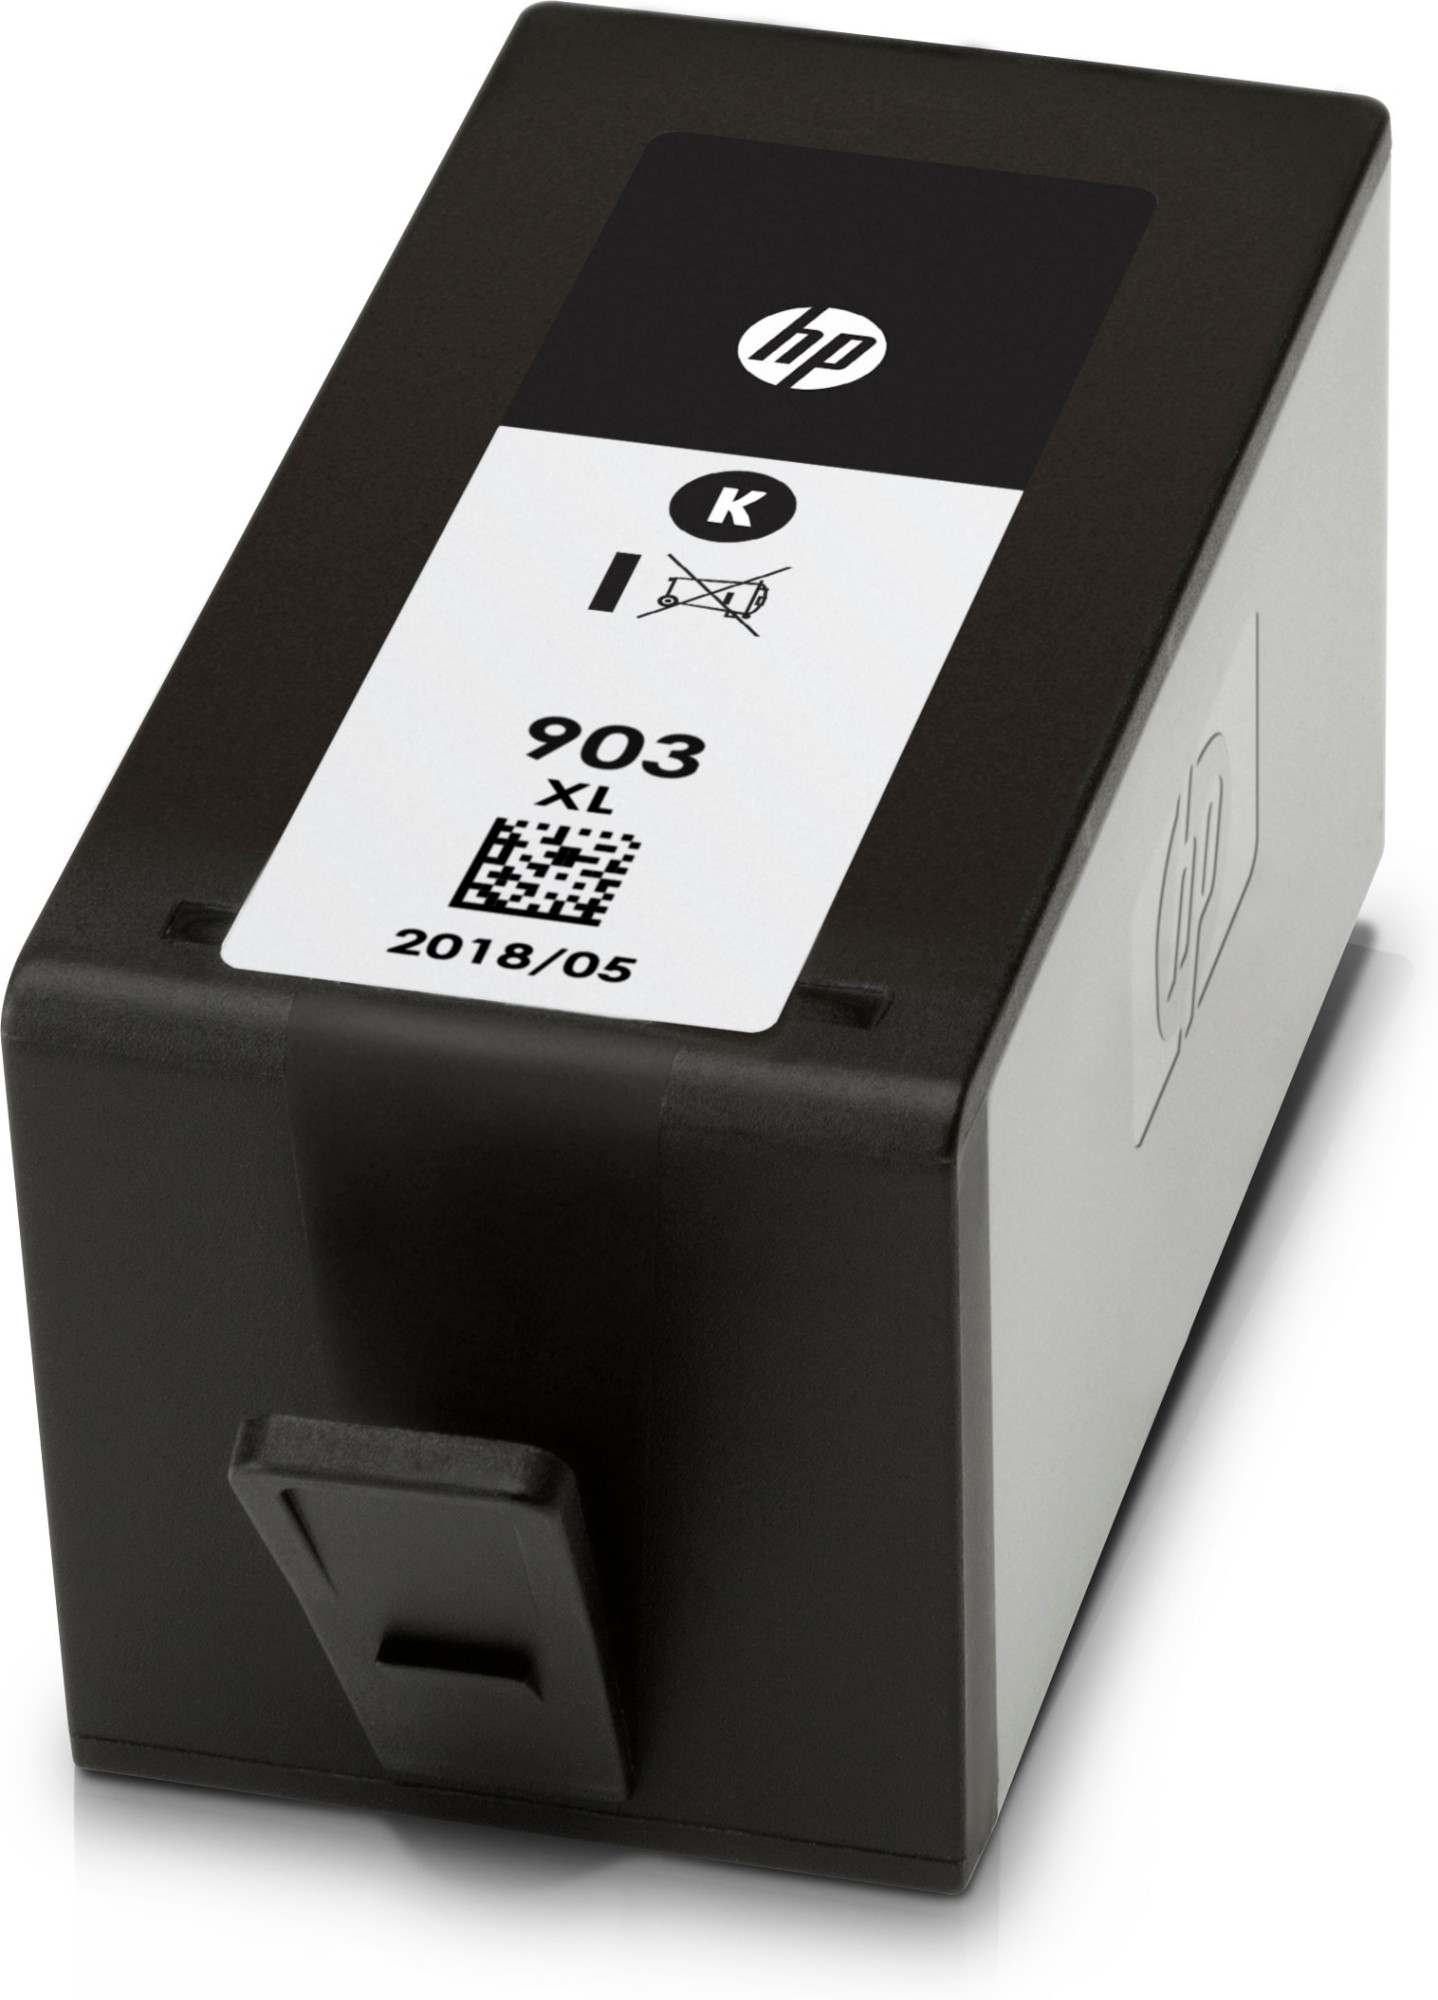 HP 903XL Ink Cartridge High Yield Black T6M15AE